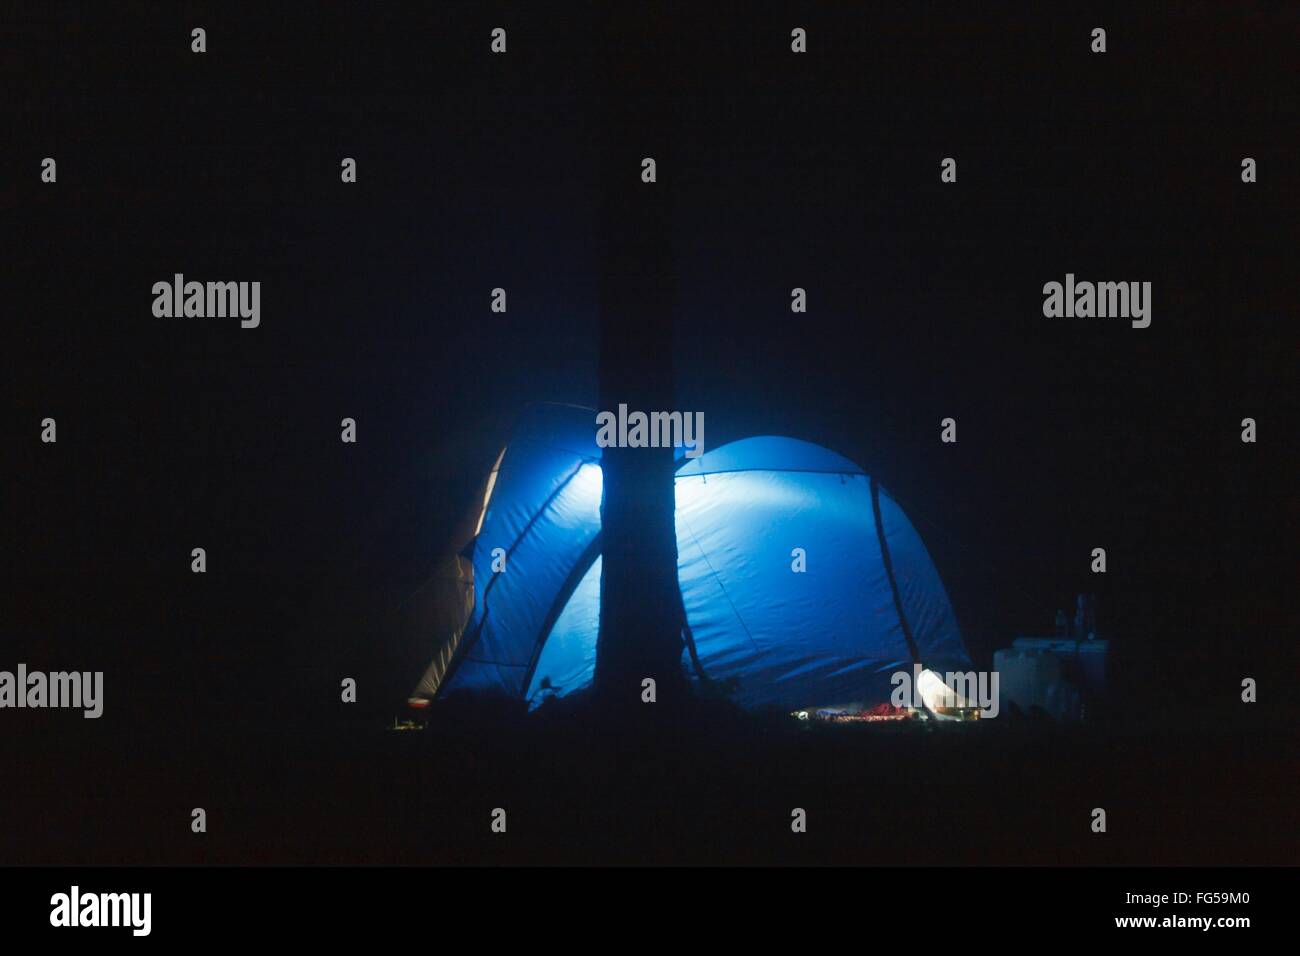 Blue Illuminated Dome Tent On Field At Night Stock Photo